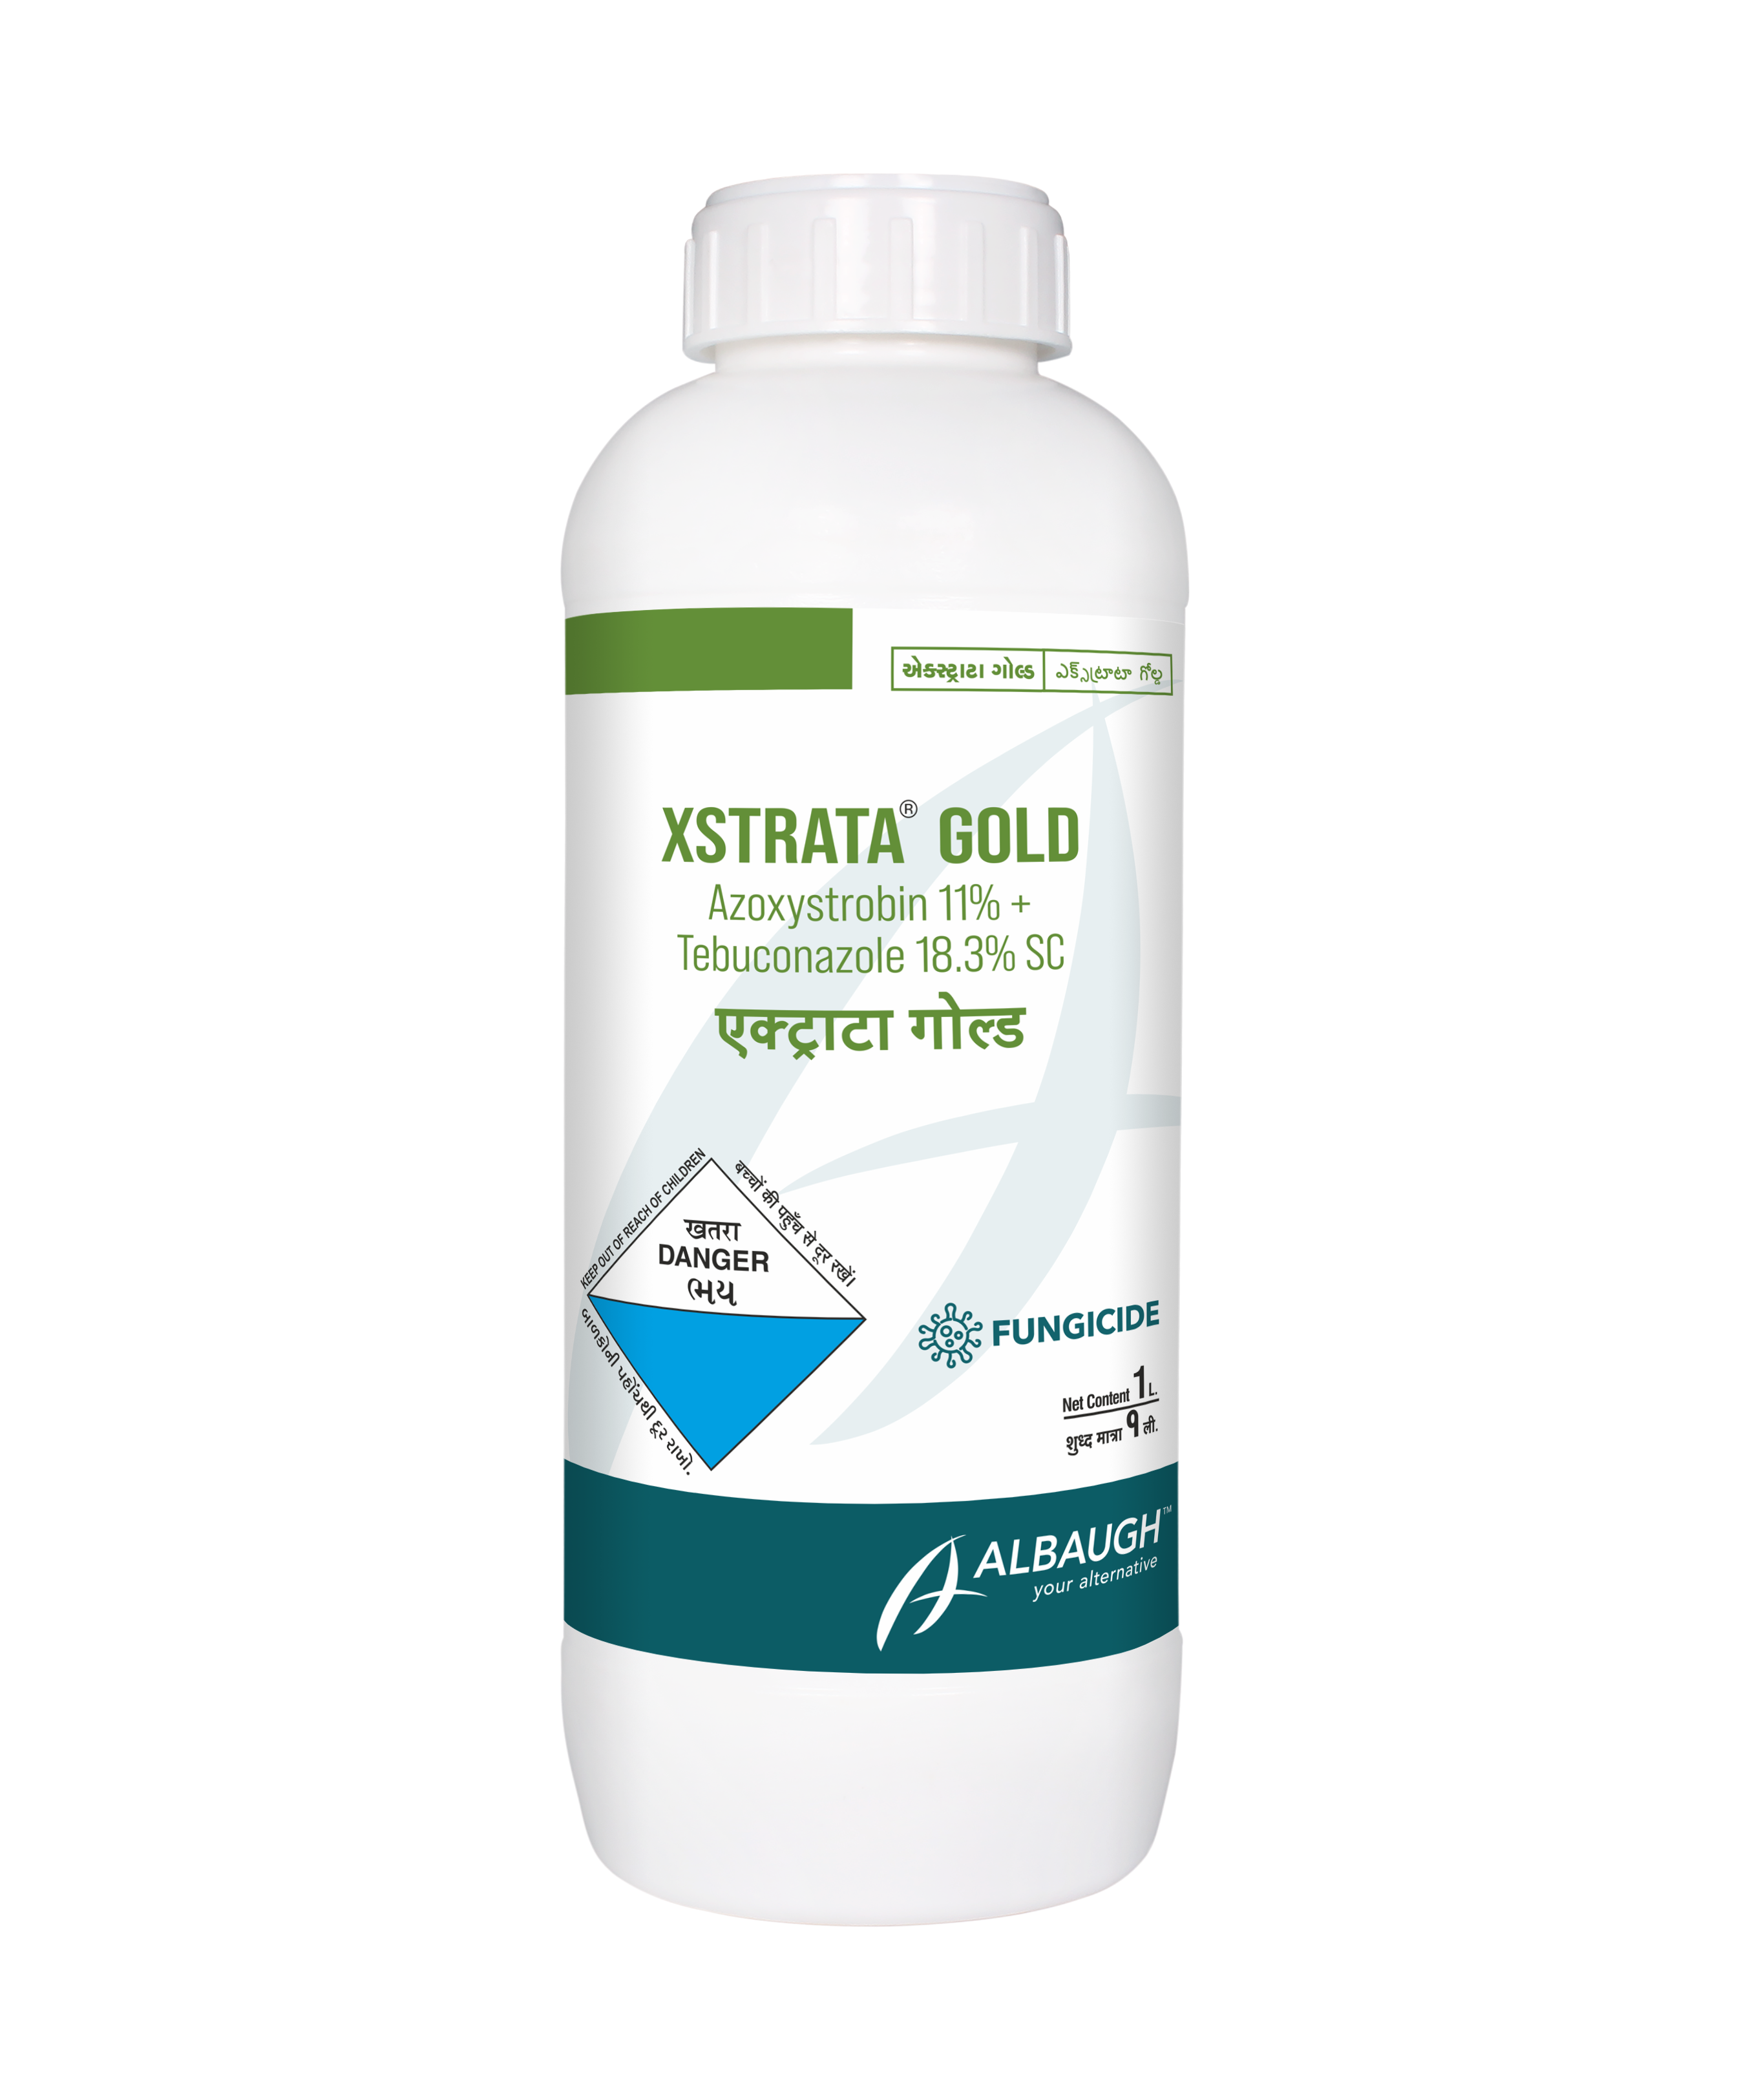 Xstrata Gold: Azoxystrobin 11% + Tebuconazole 18.3% SC